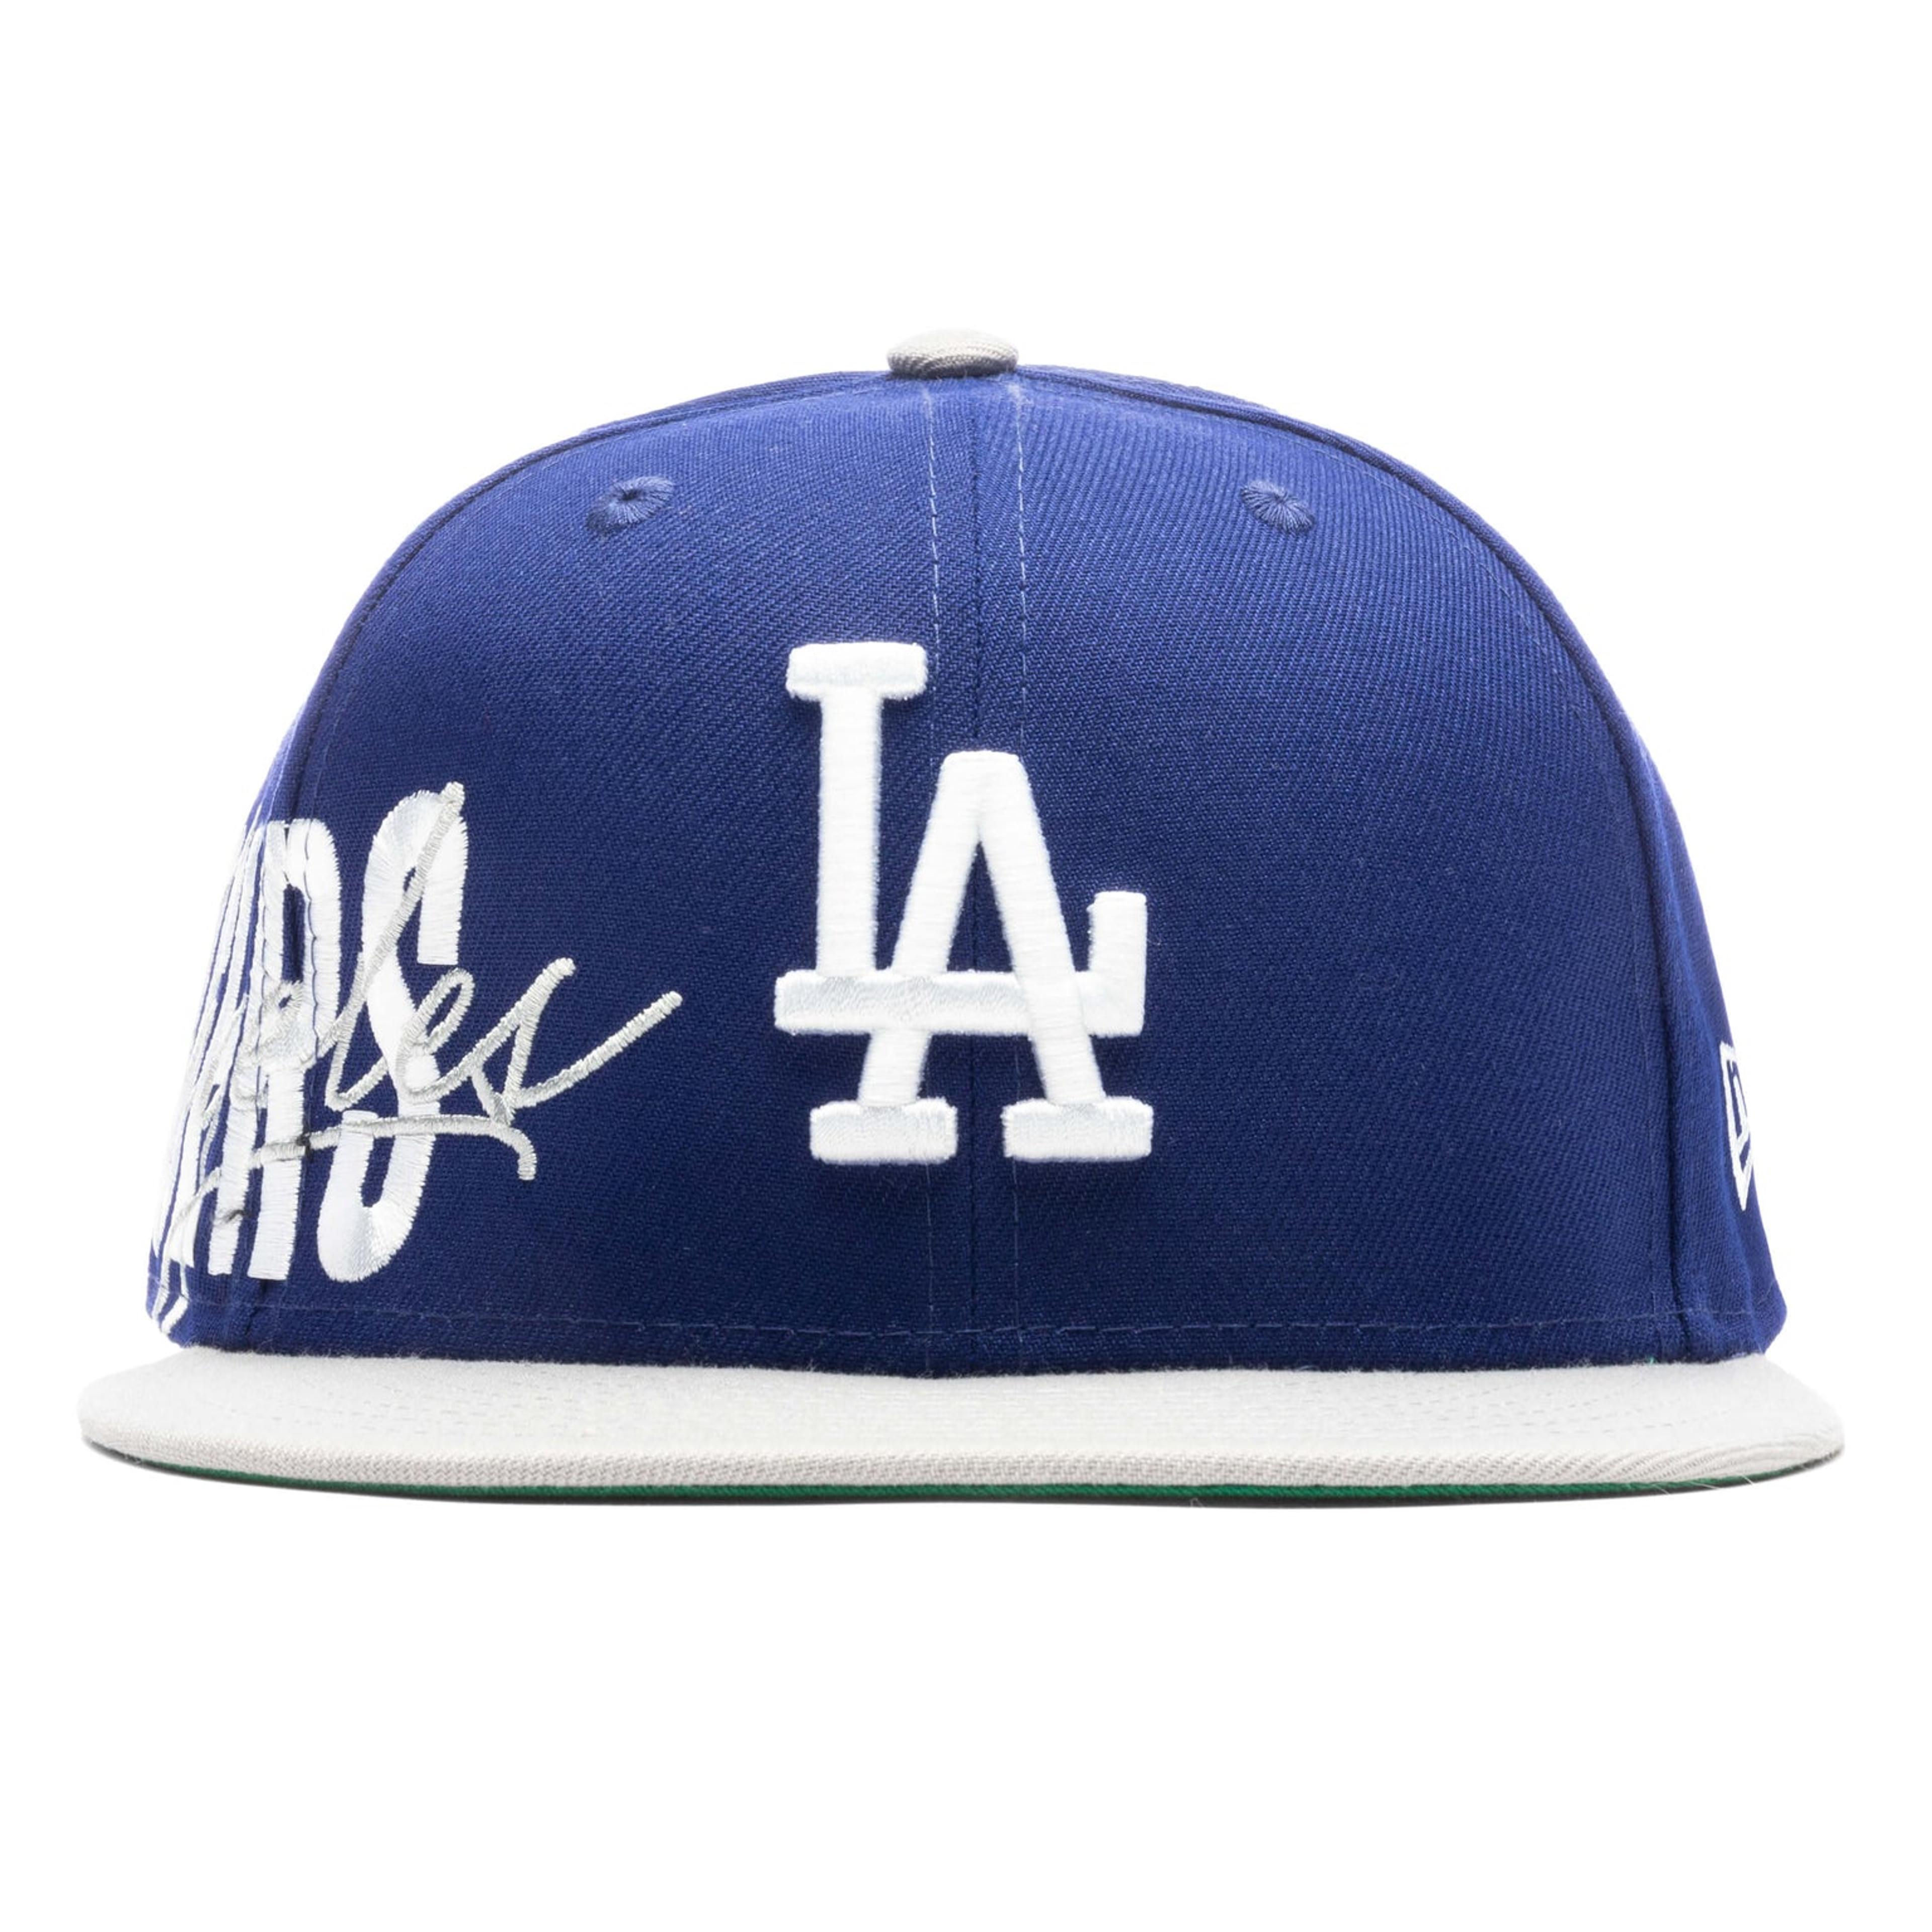 New Era 950 Los Angeles Dodgers 'Sidefont' Adjustable